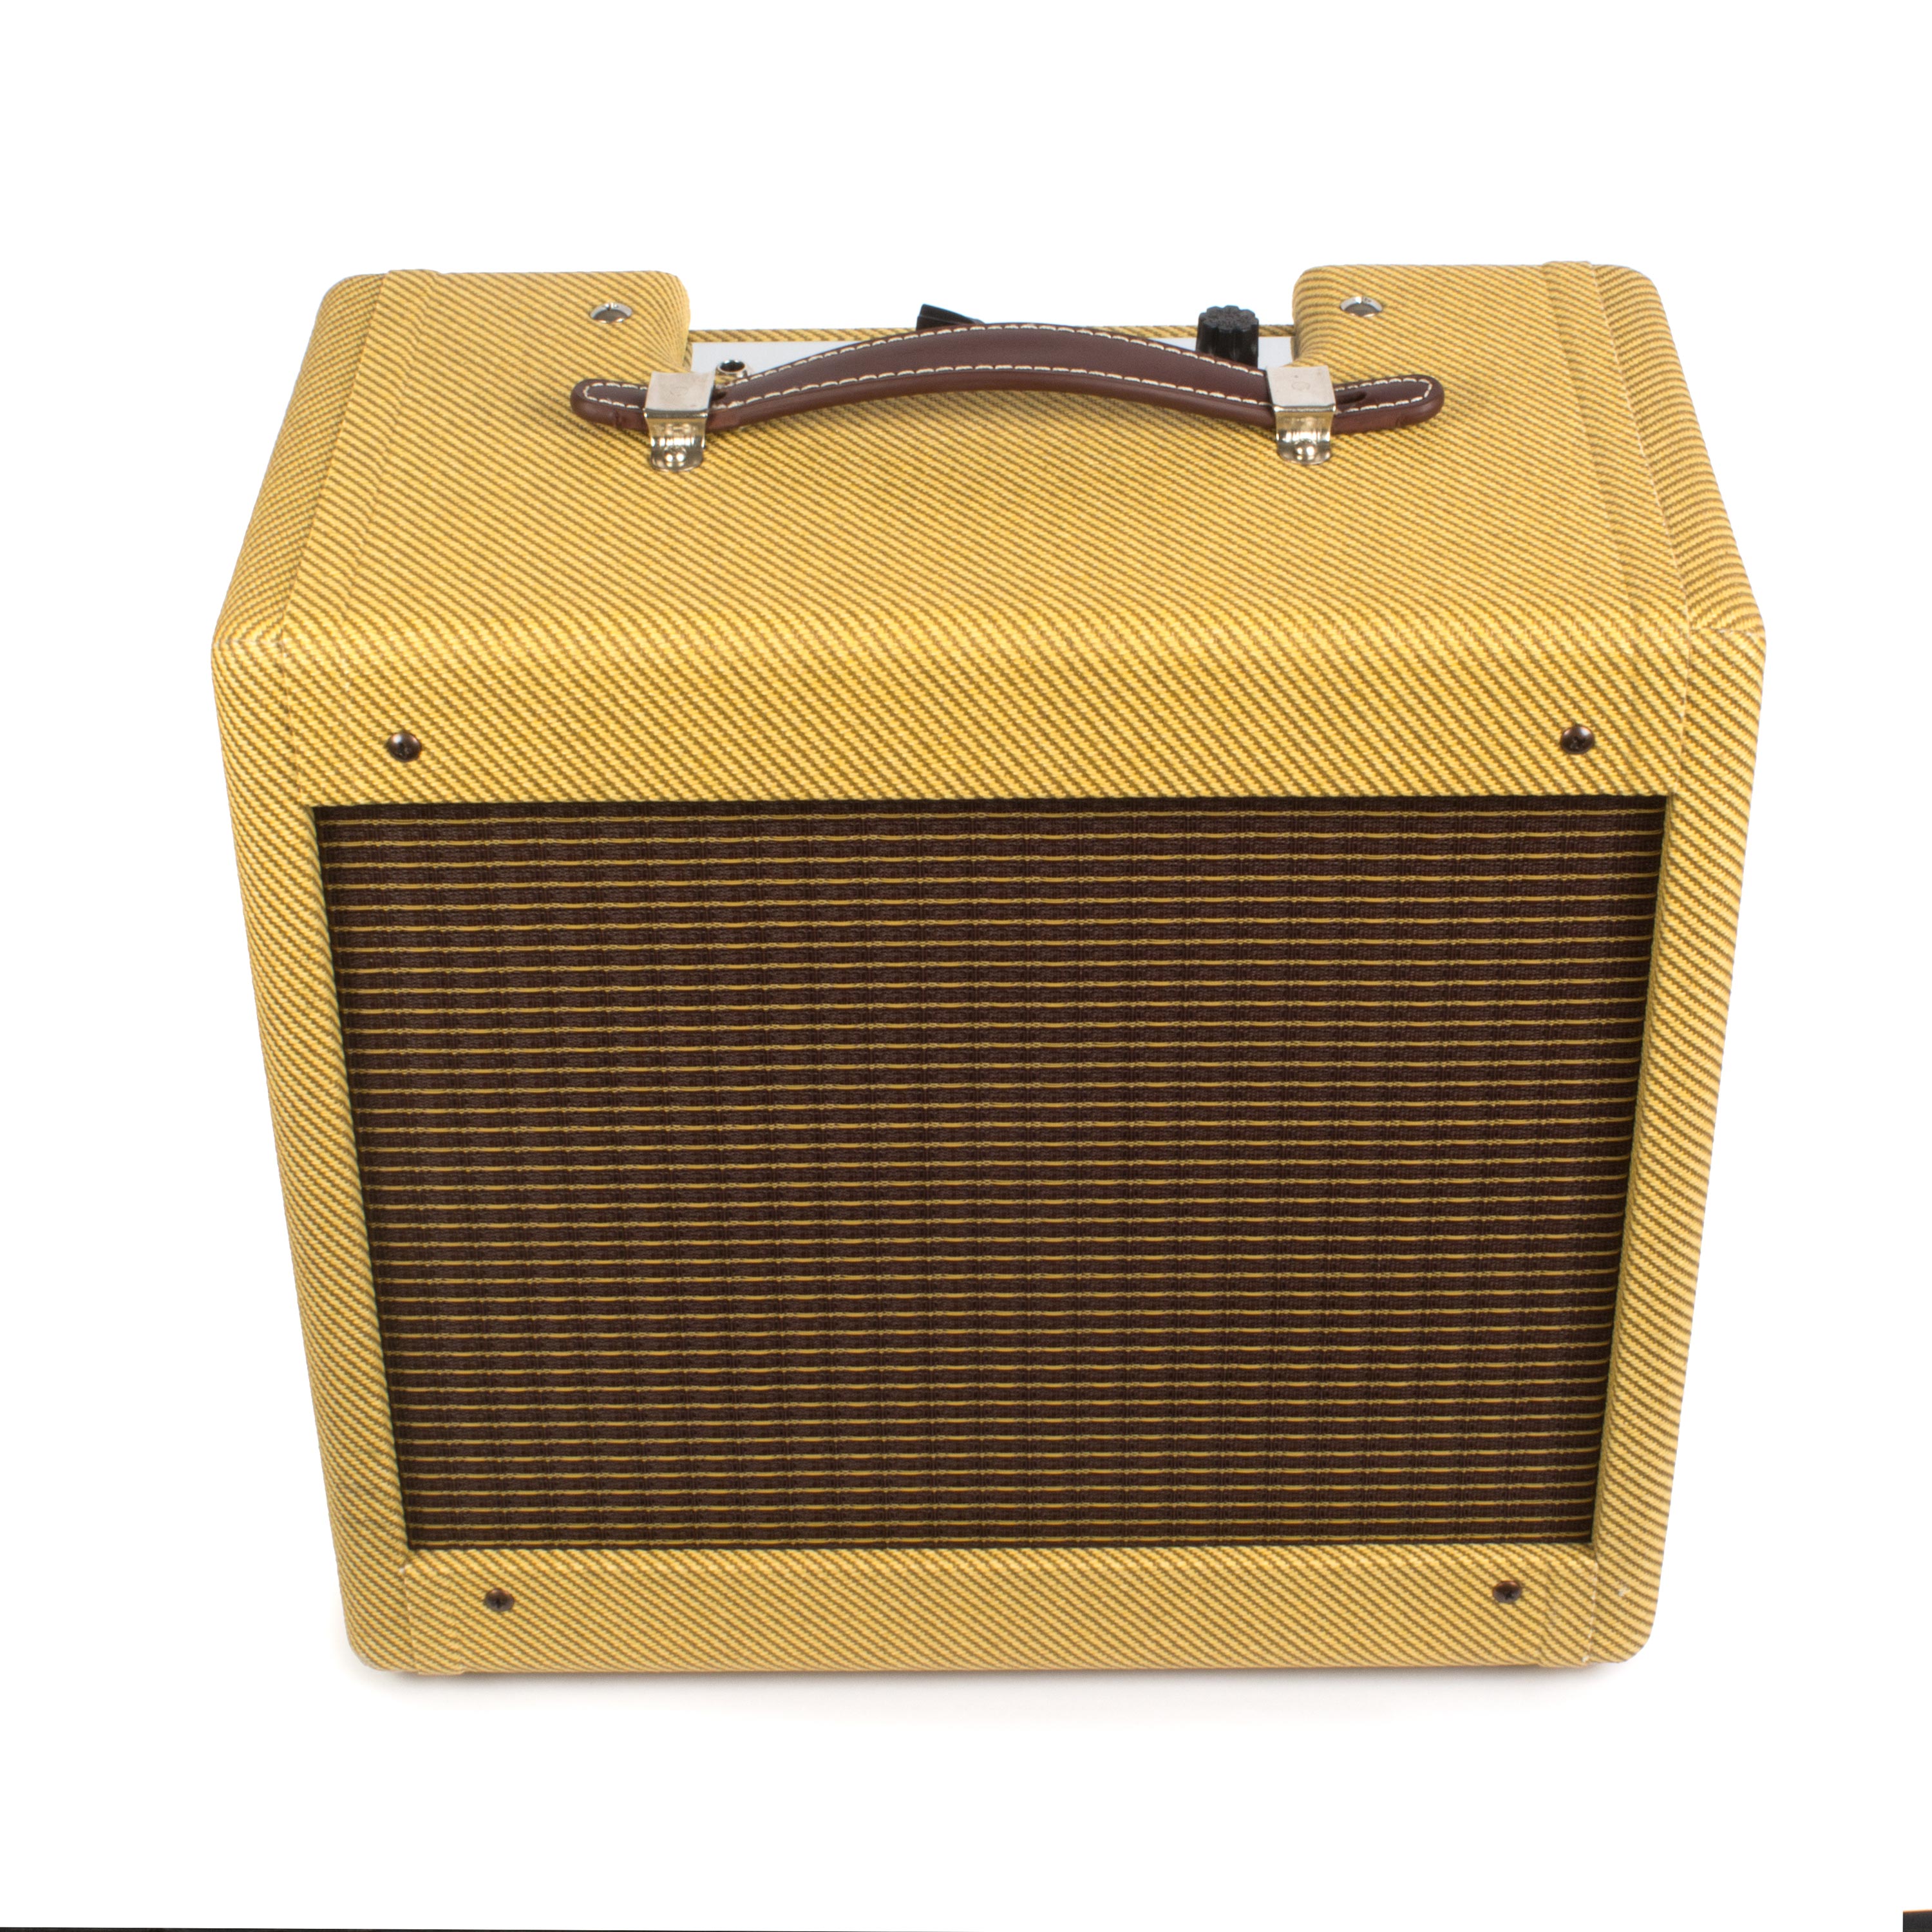 '57 Mini Tweed 5W Amp Kit